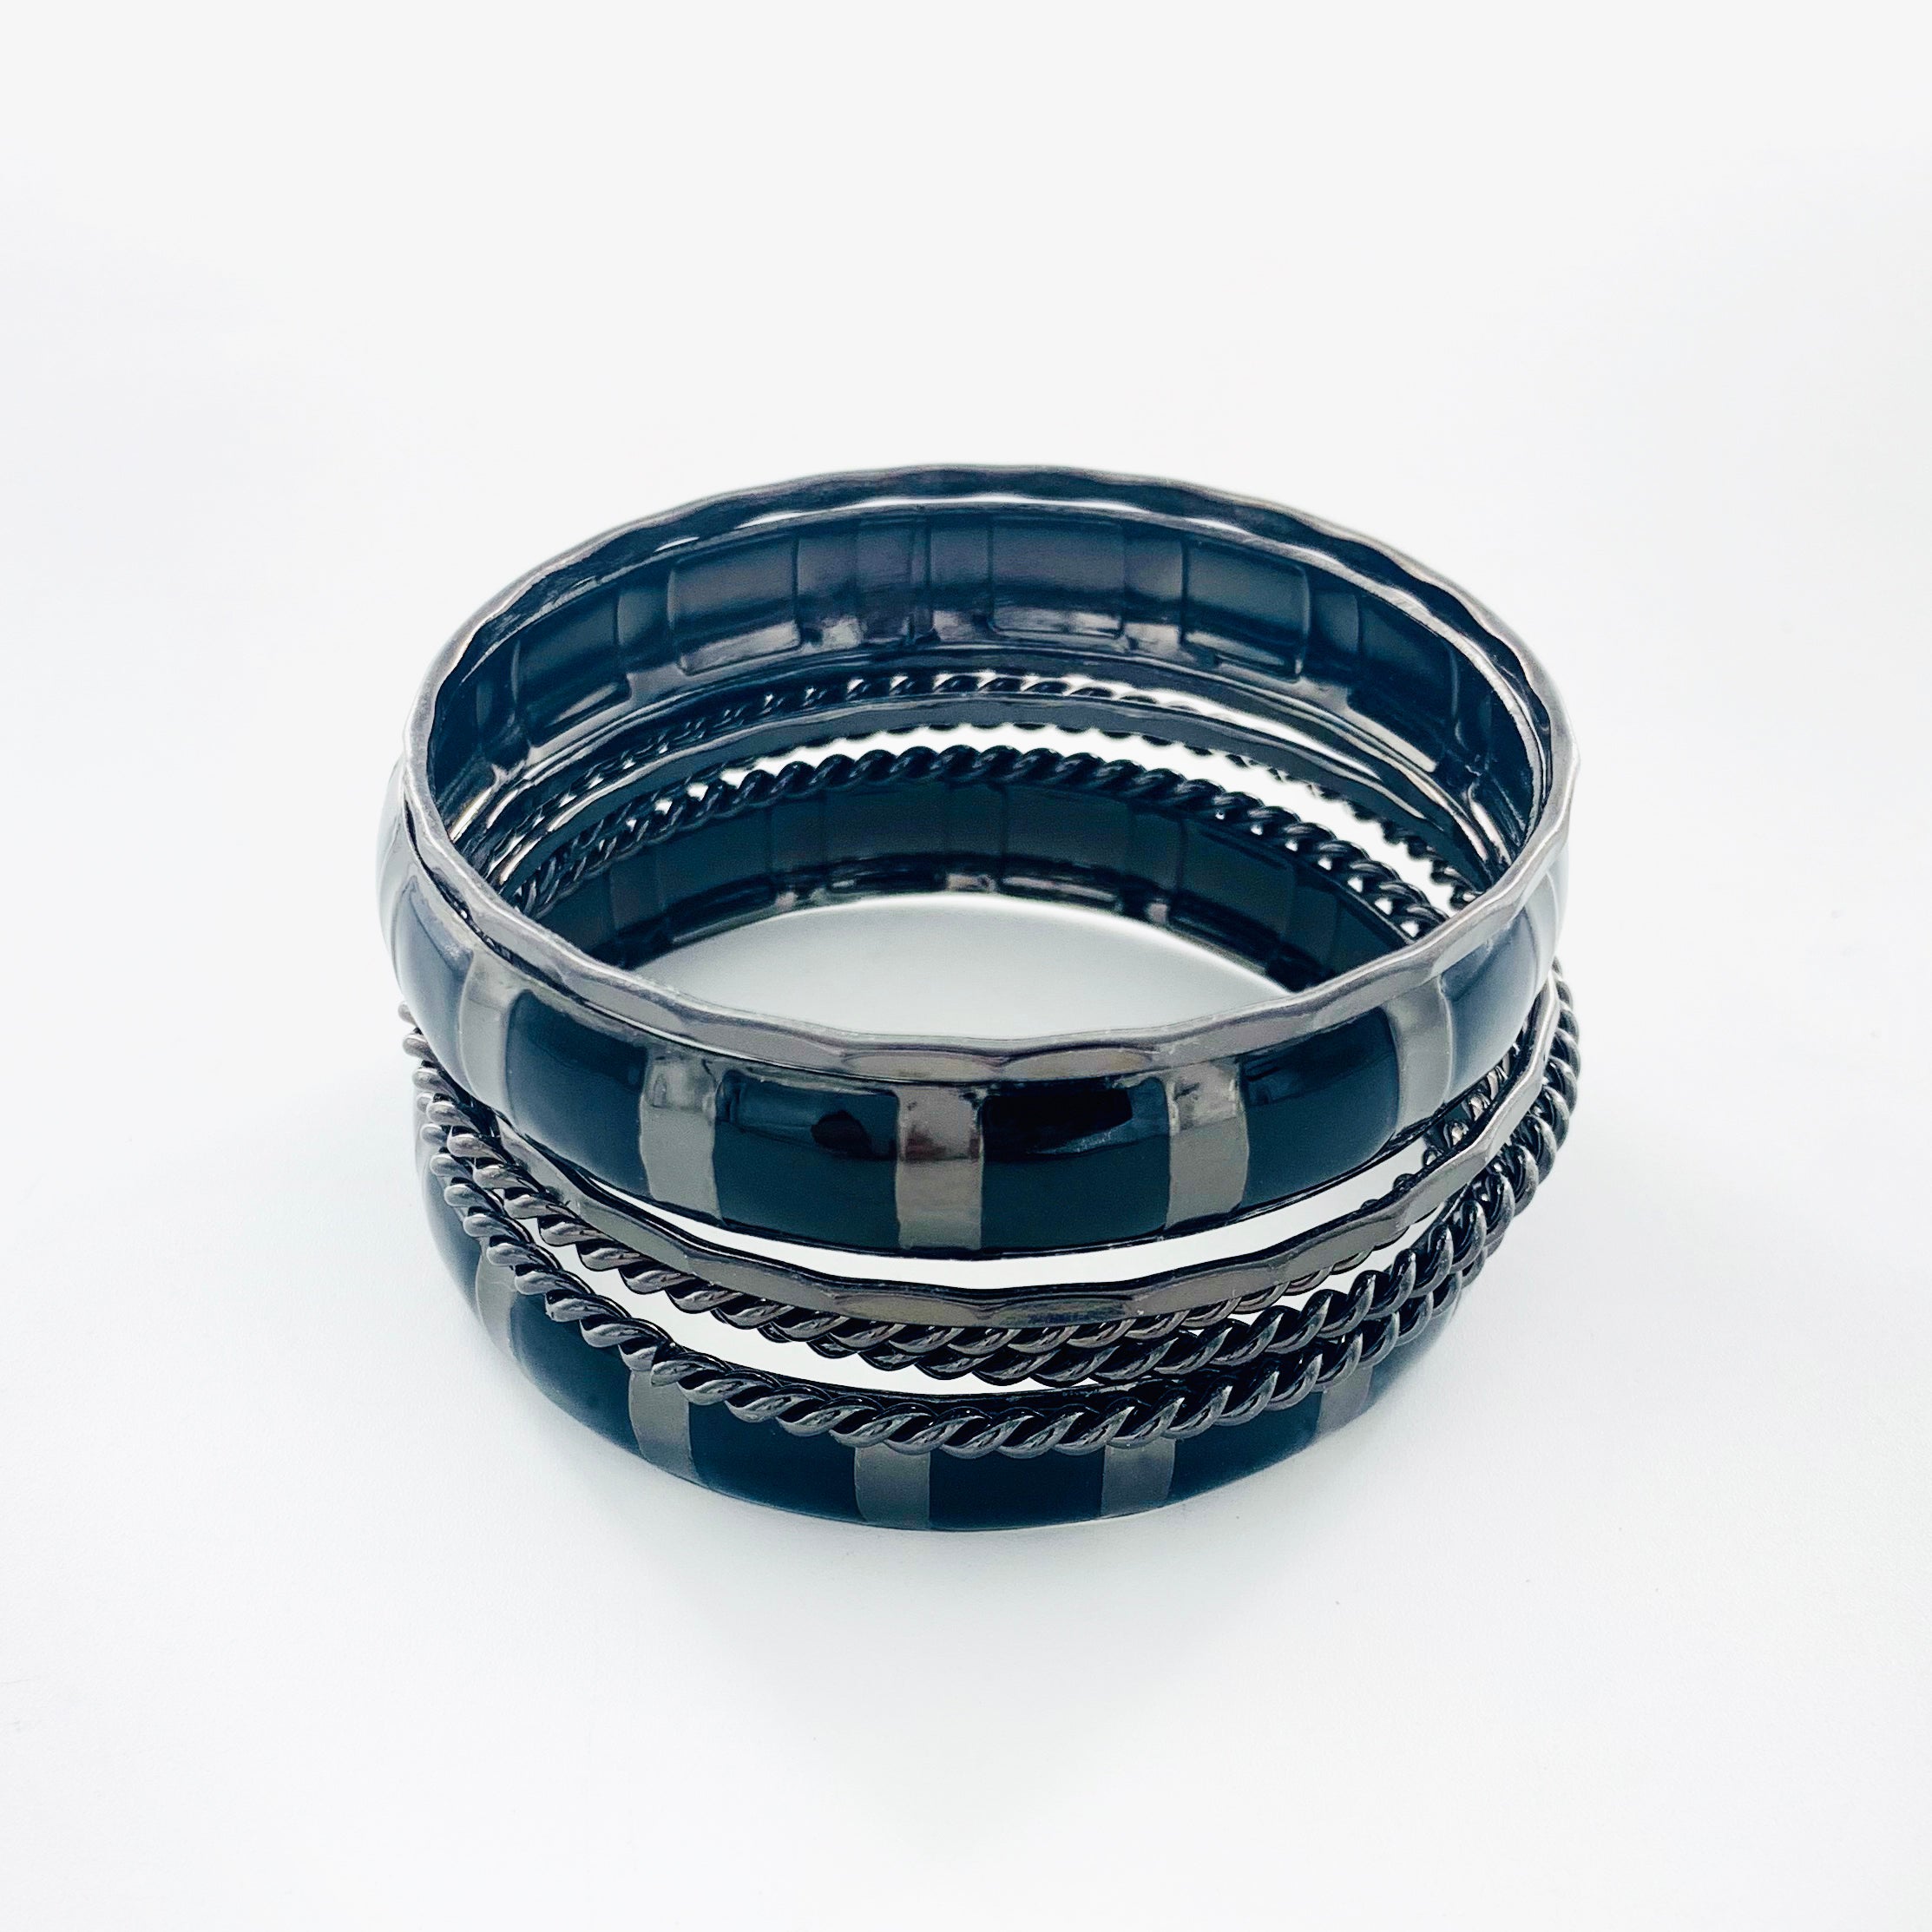 Gunmetal grey bangles with black stripes